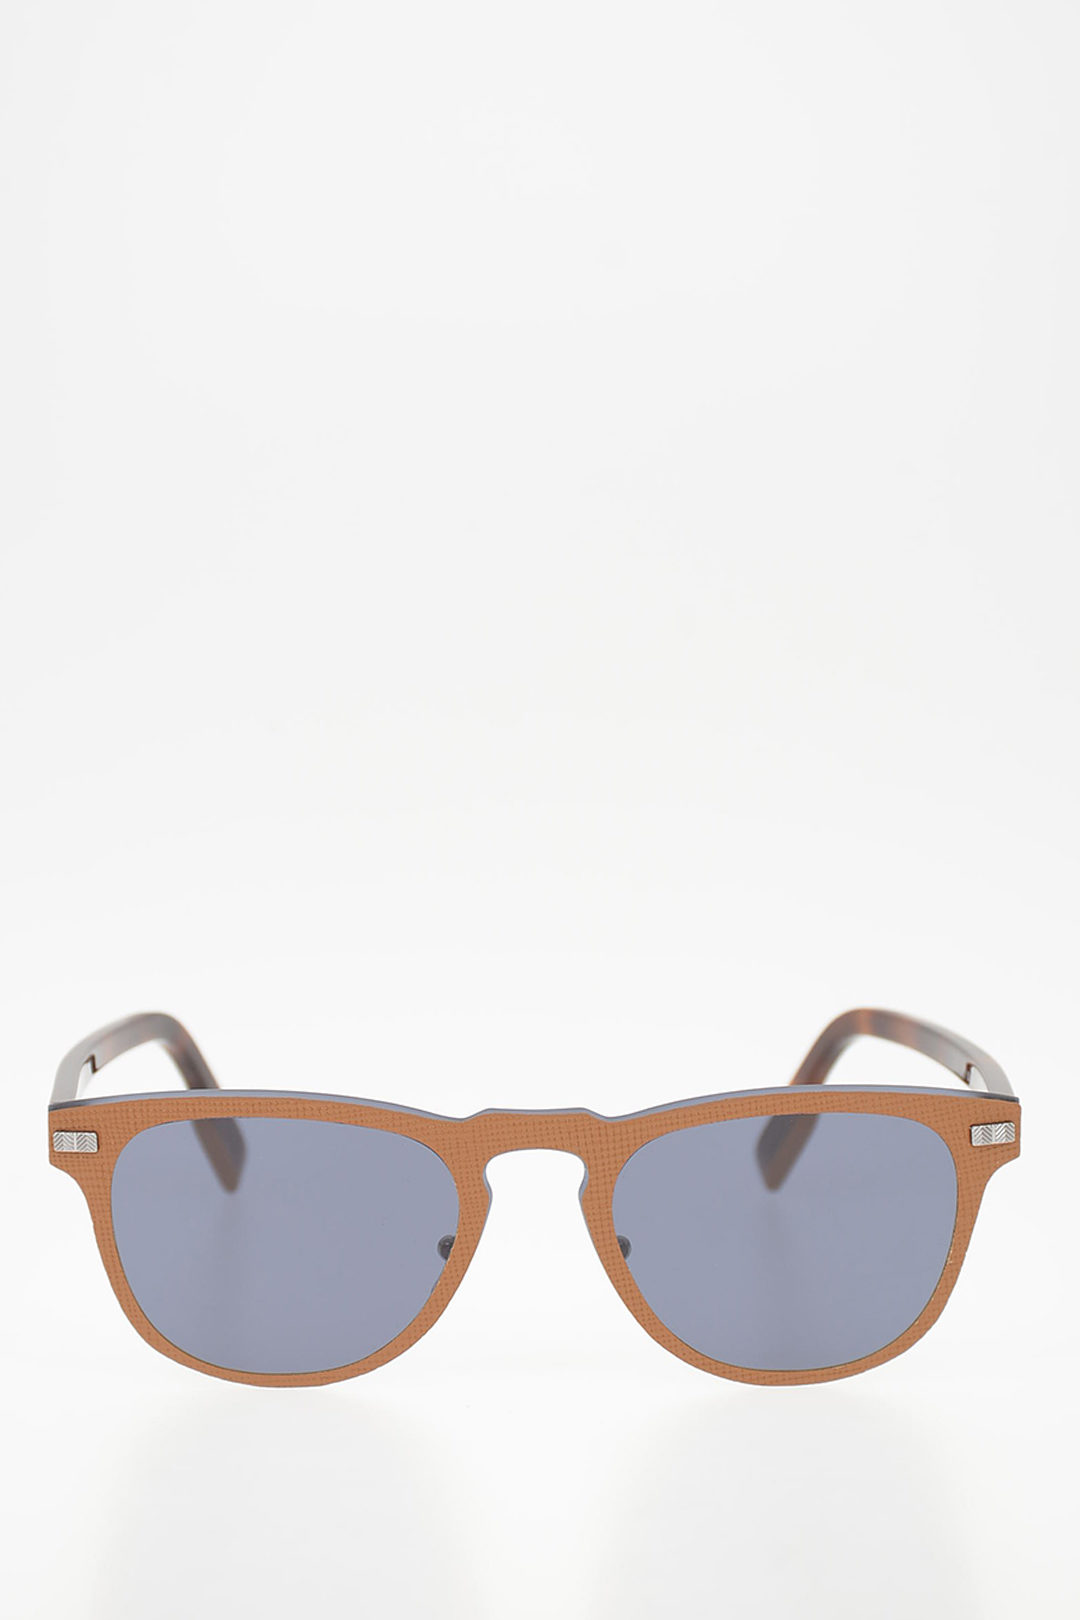 Ermenegildo Zegna Full Rim Universal Fit Sunglasses men - Glamood Outlet